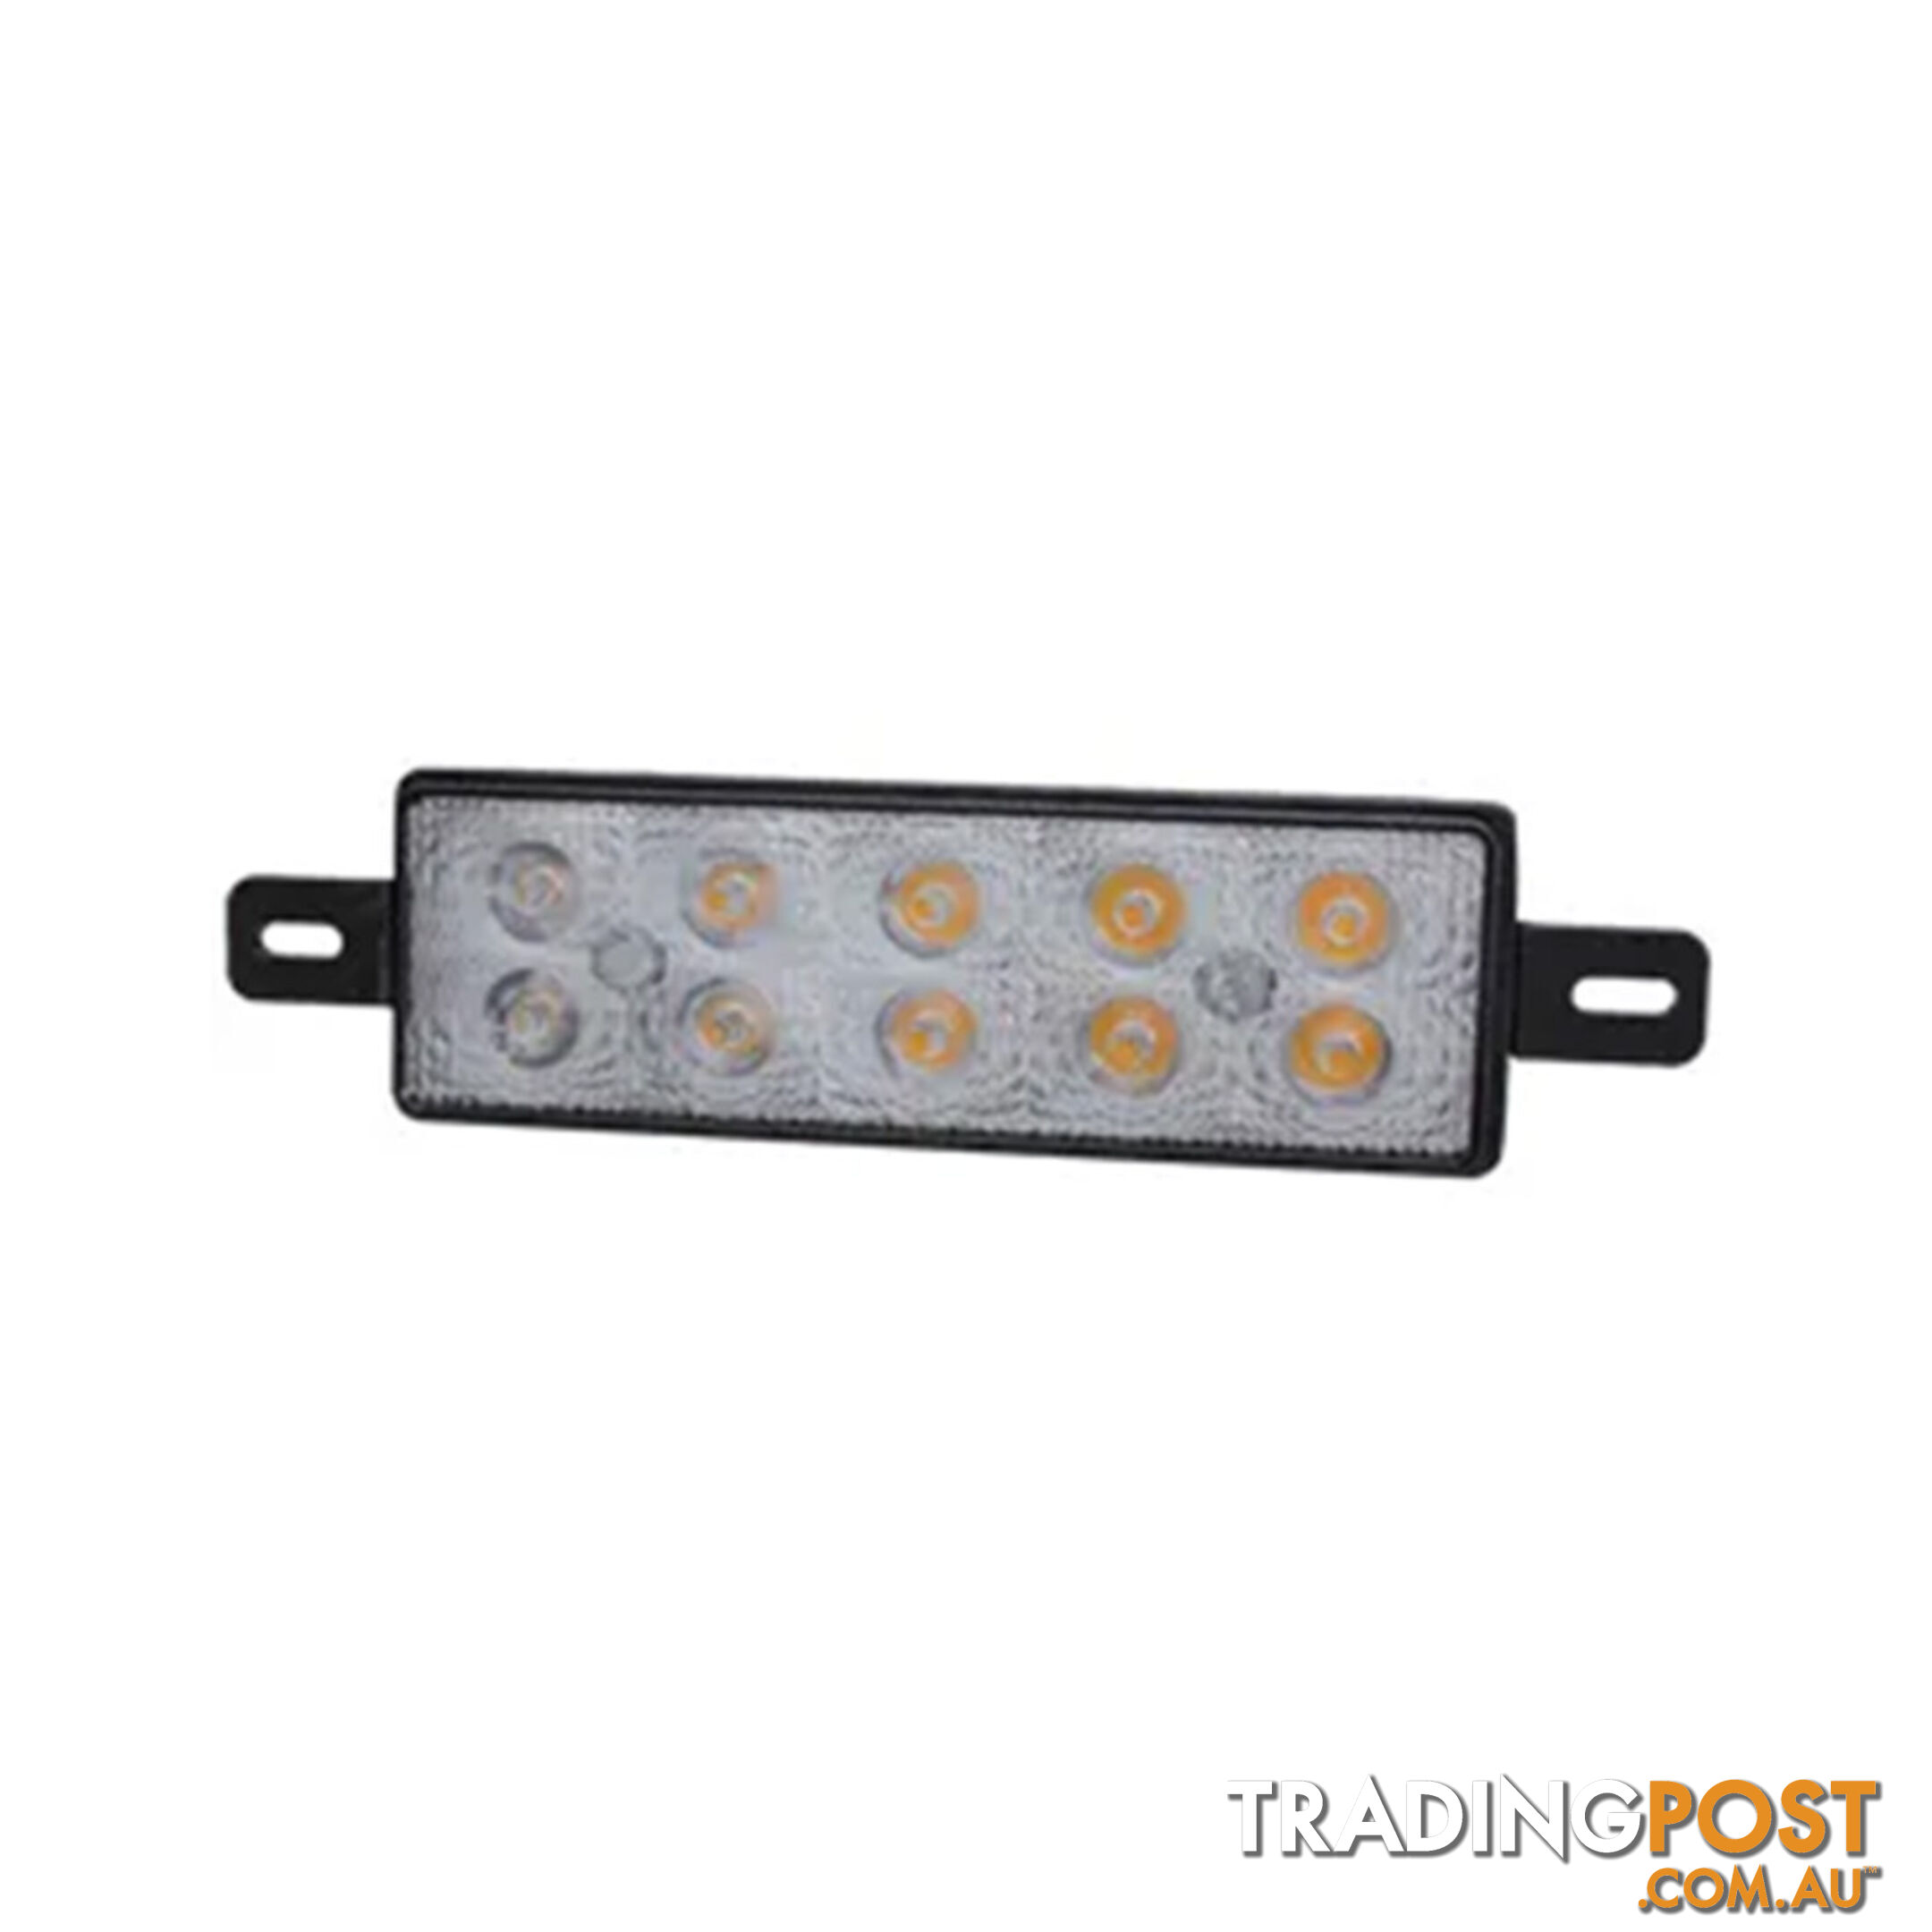 WhiteVision Bull Bar Lamp LED Directional Indicator Amber/Clear SKU - FM880A, FM880C, FM880LEDB